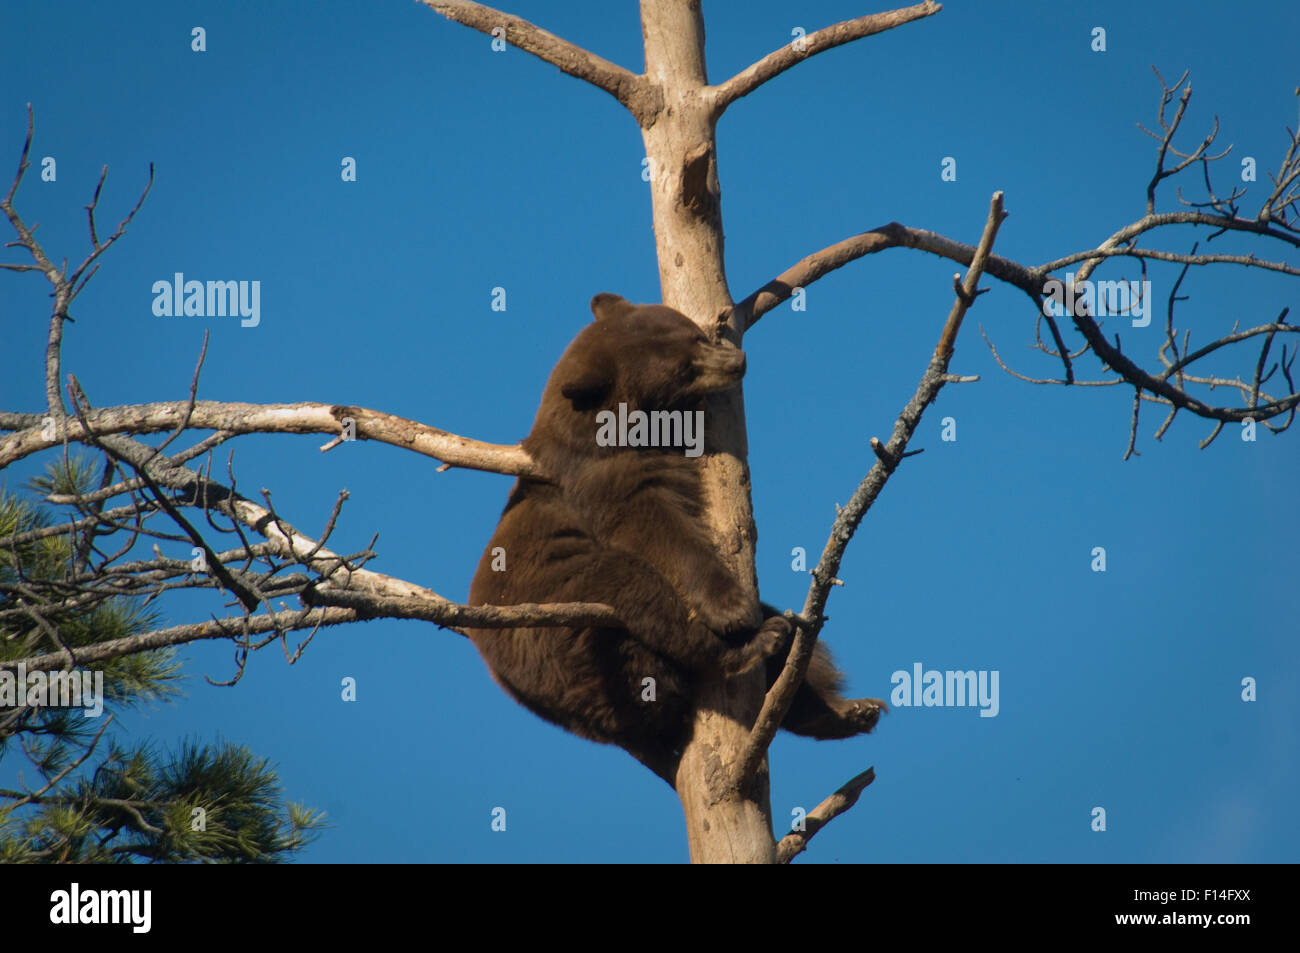 BLACK BEAR IN TREE Stock Photo